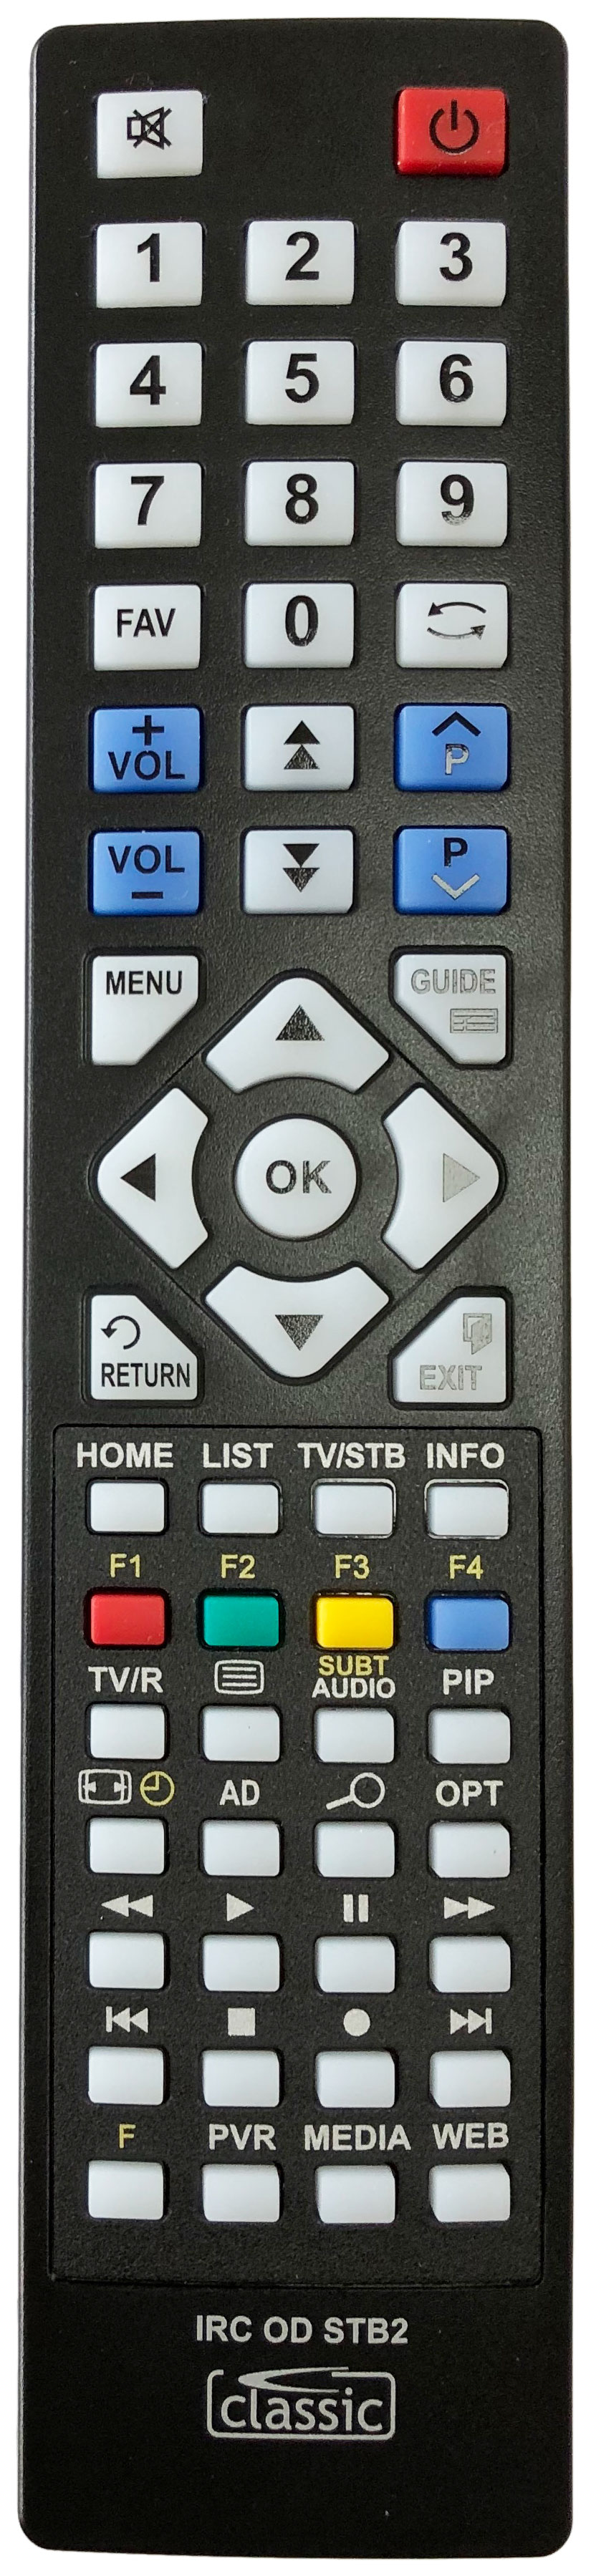 HUMAX VACI-5300 Remote Control